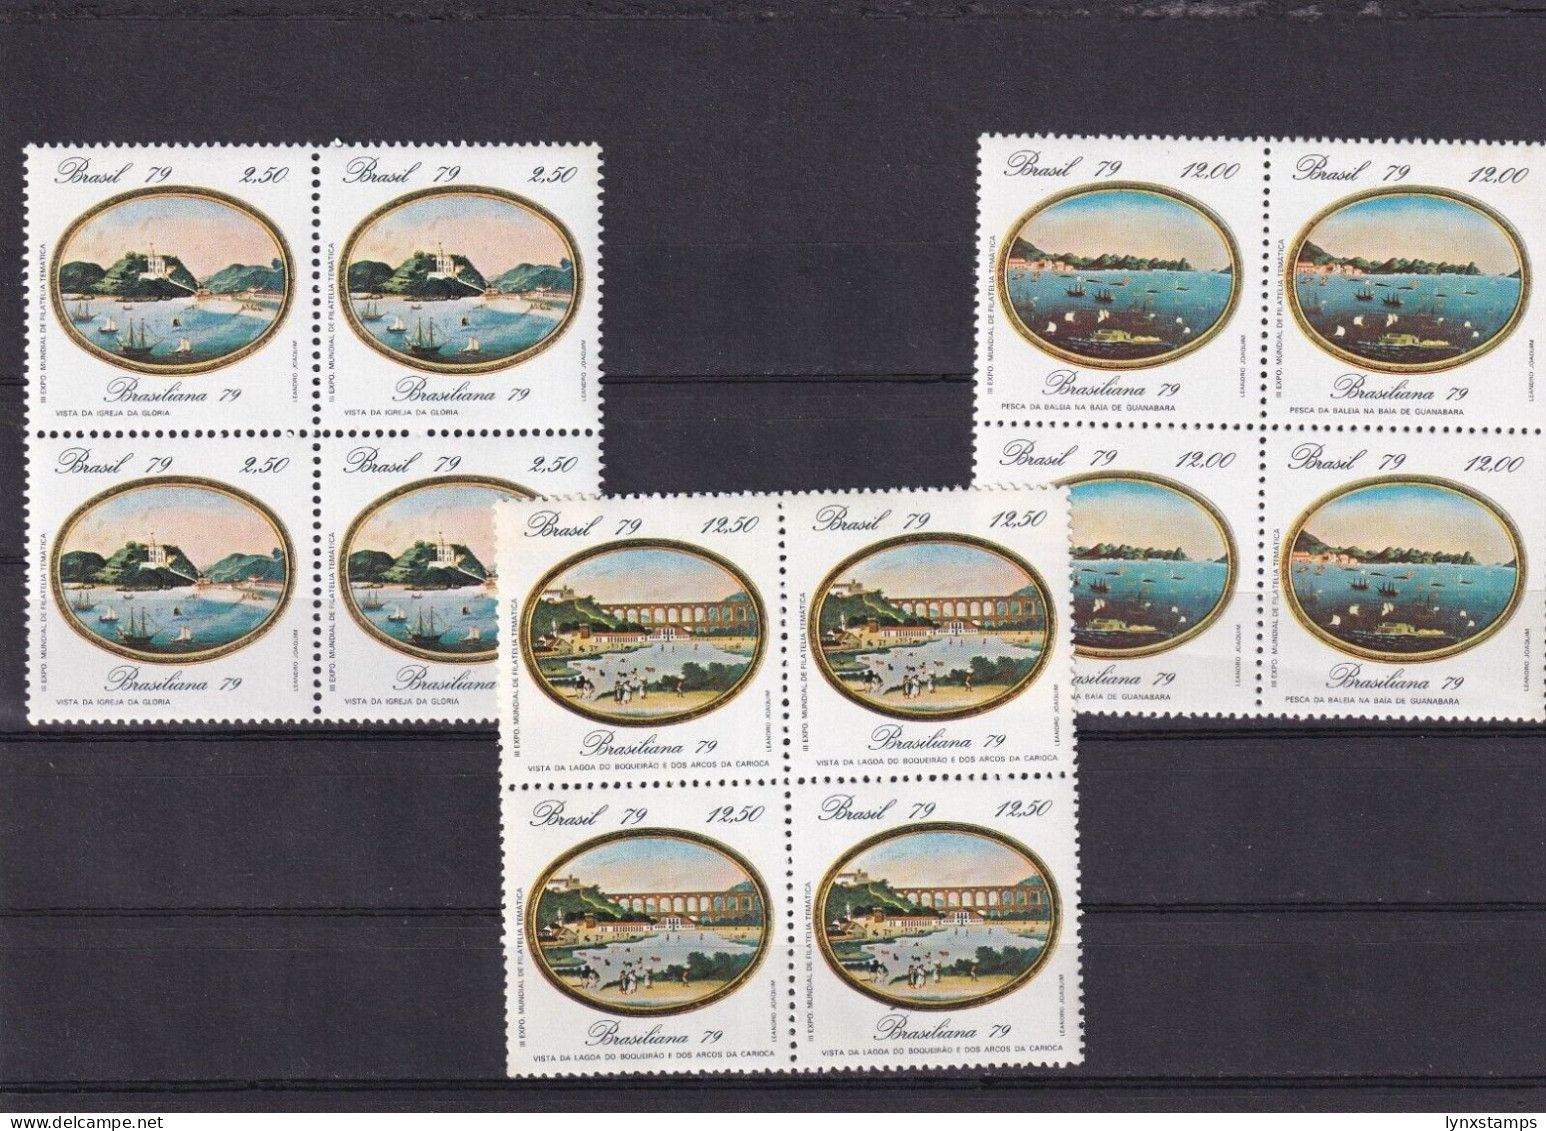 SA06 Brazil 1979 Third World Thematic Stamp Exhibition "Brasiliana 79" Blocks - Ungebraucht